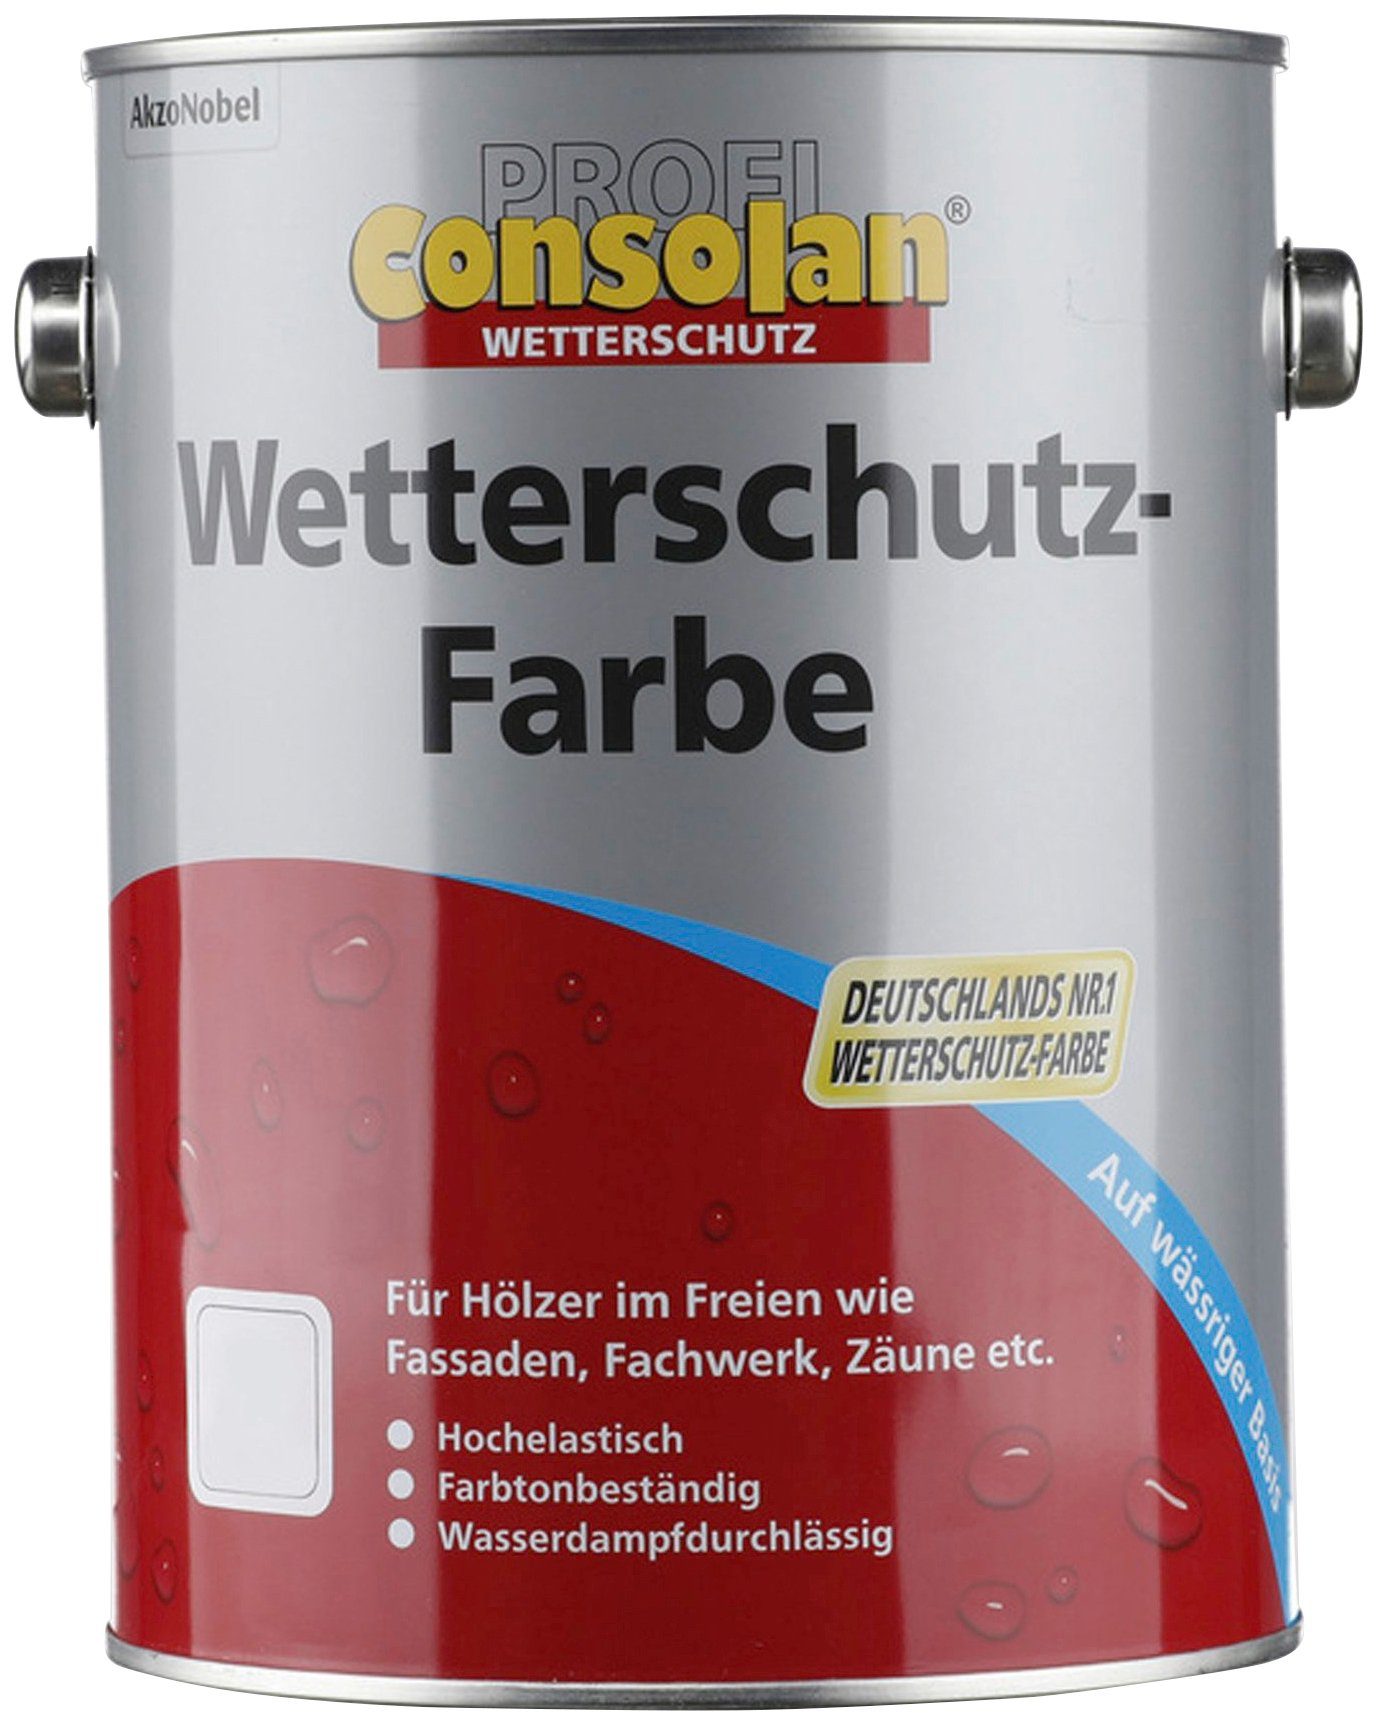 Holzschutz, Liter, Profi Consolan  Wetterschutzfarbe 2,5 grau